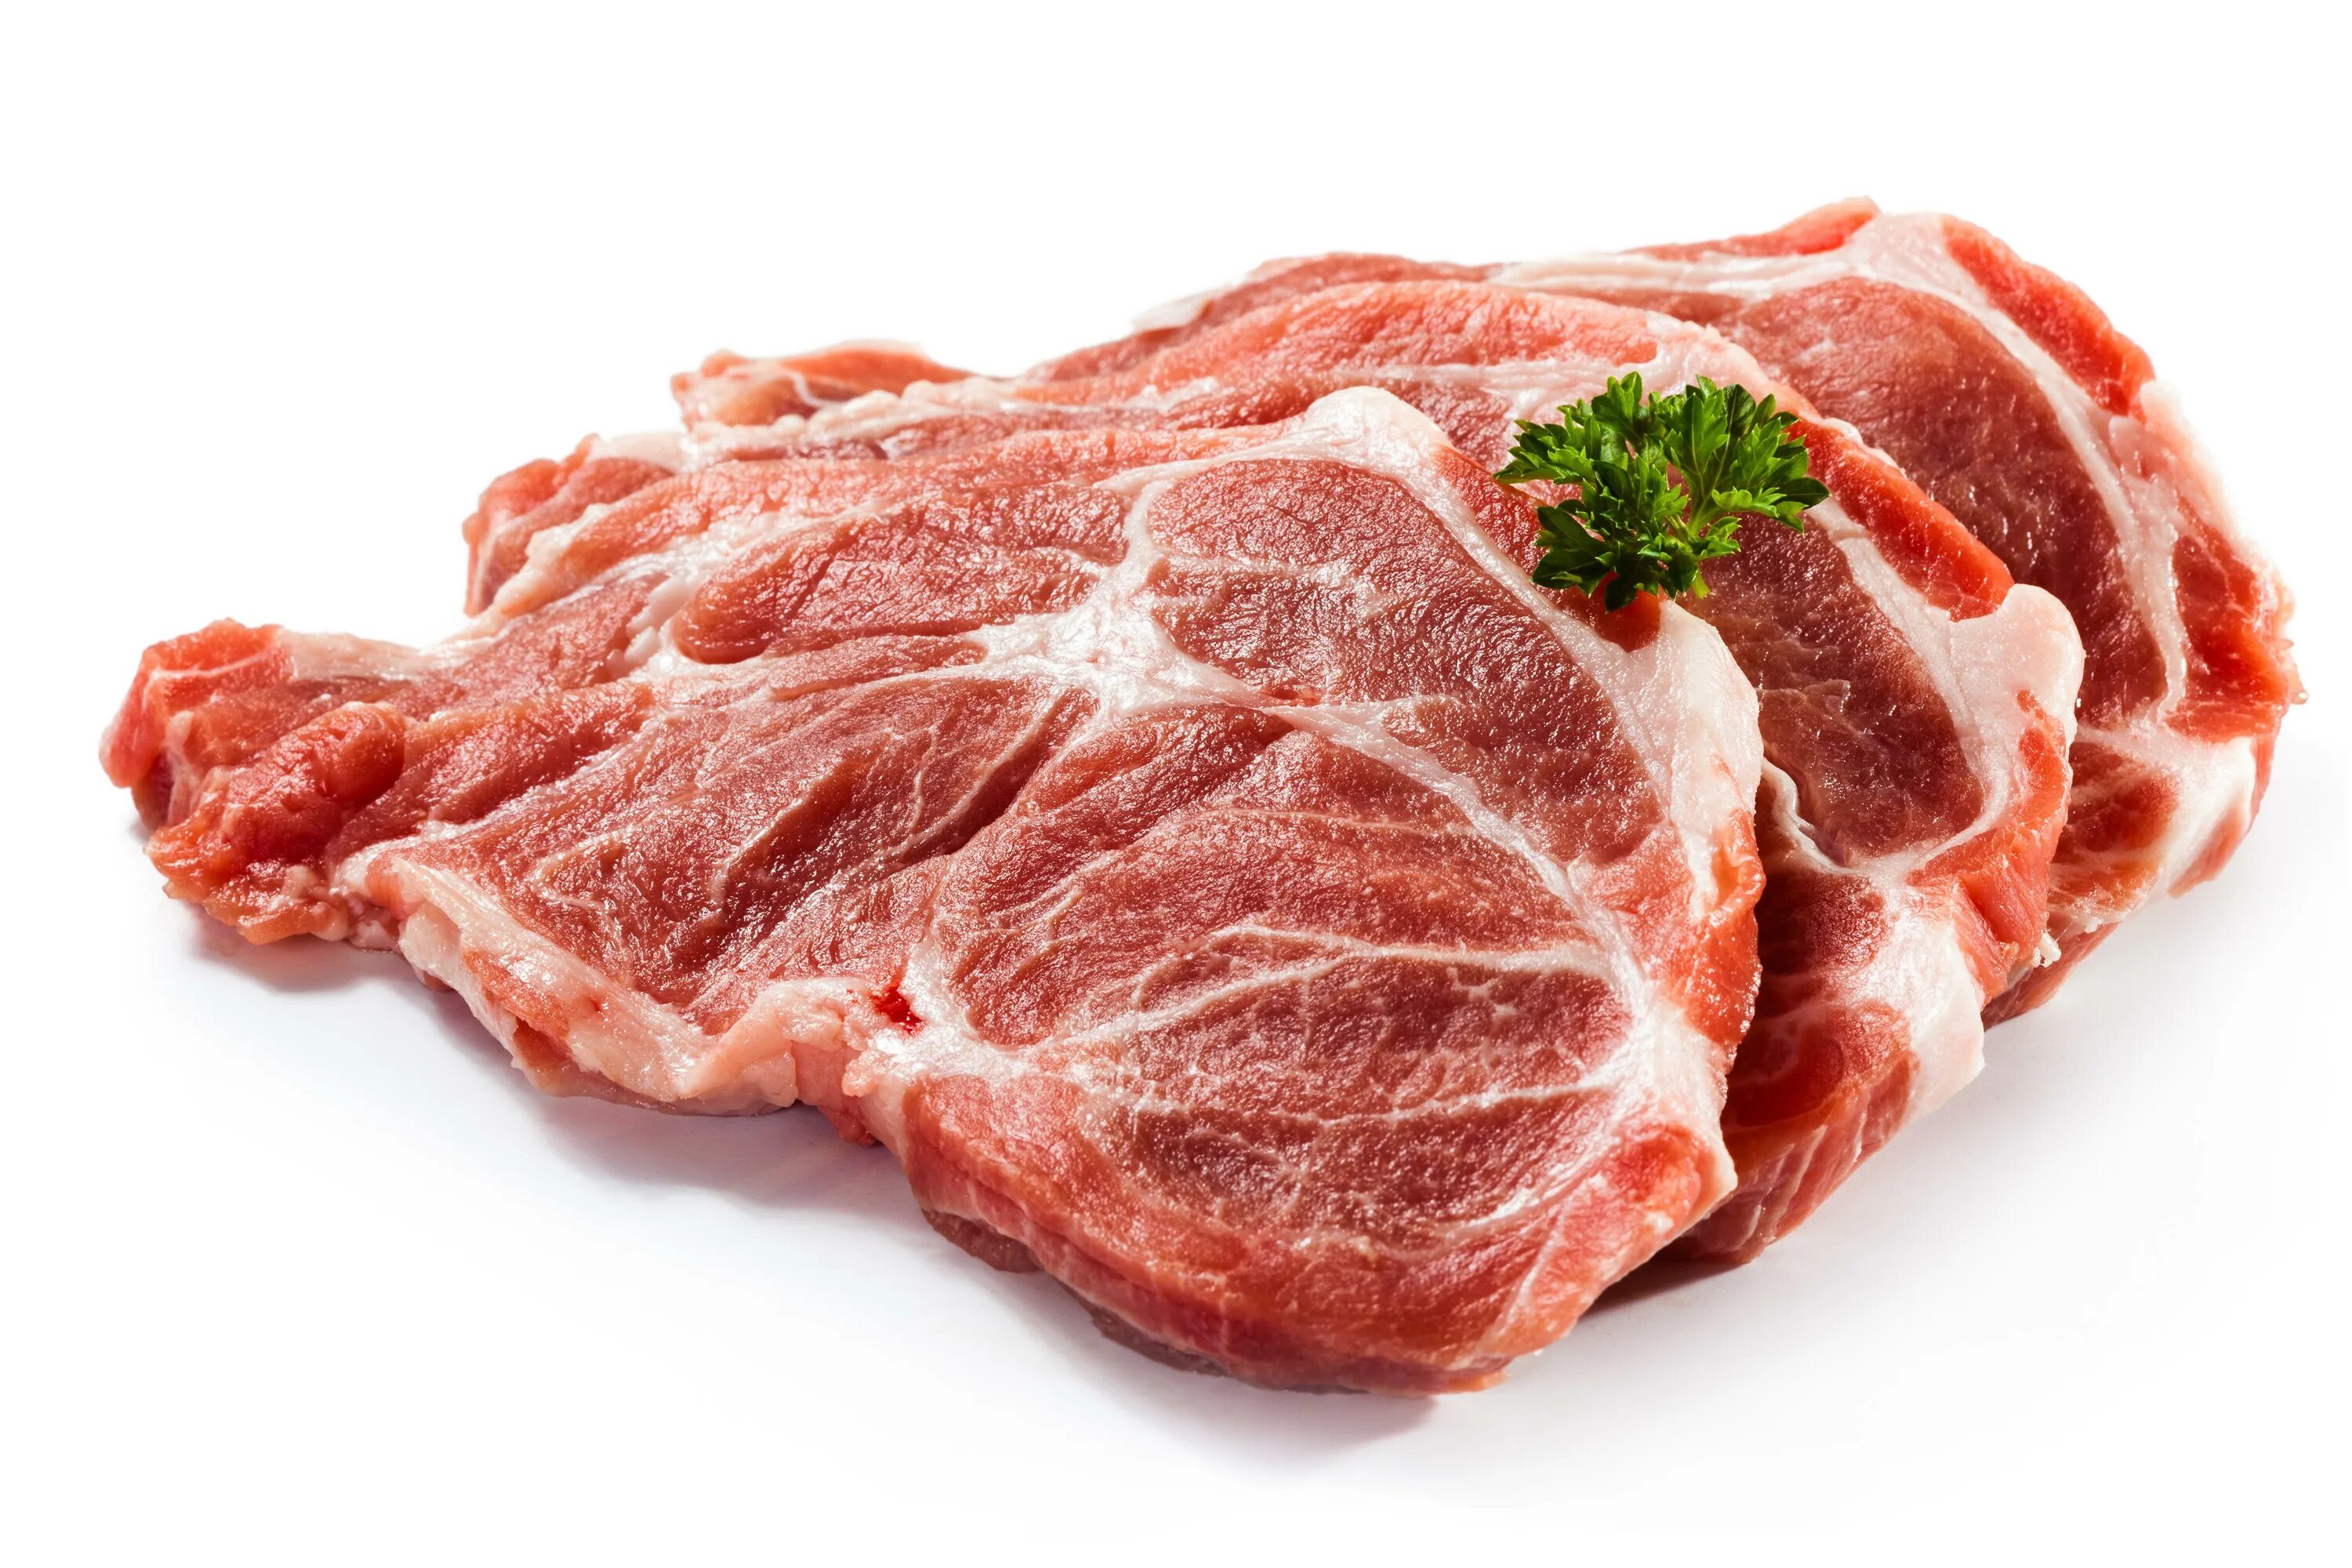 Мясо без крови видеть во. Мясо на белом фоне. Мясо свинины на белом фоне. Свинина на белом фоне. Мясо свинина говядина баранина.